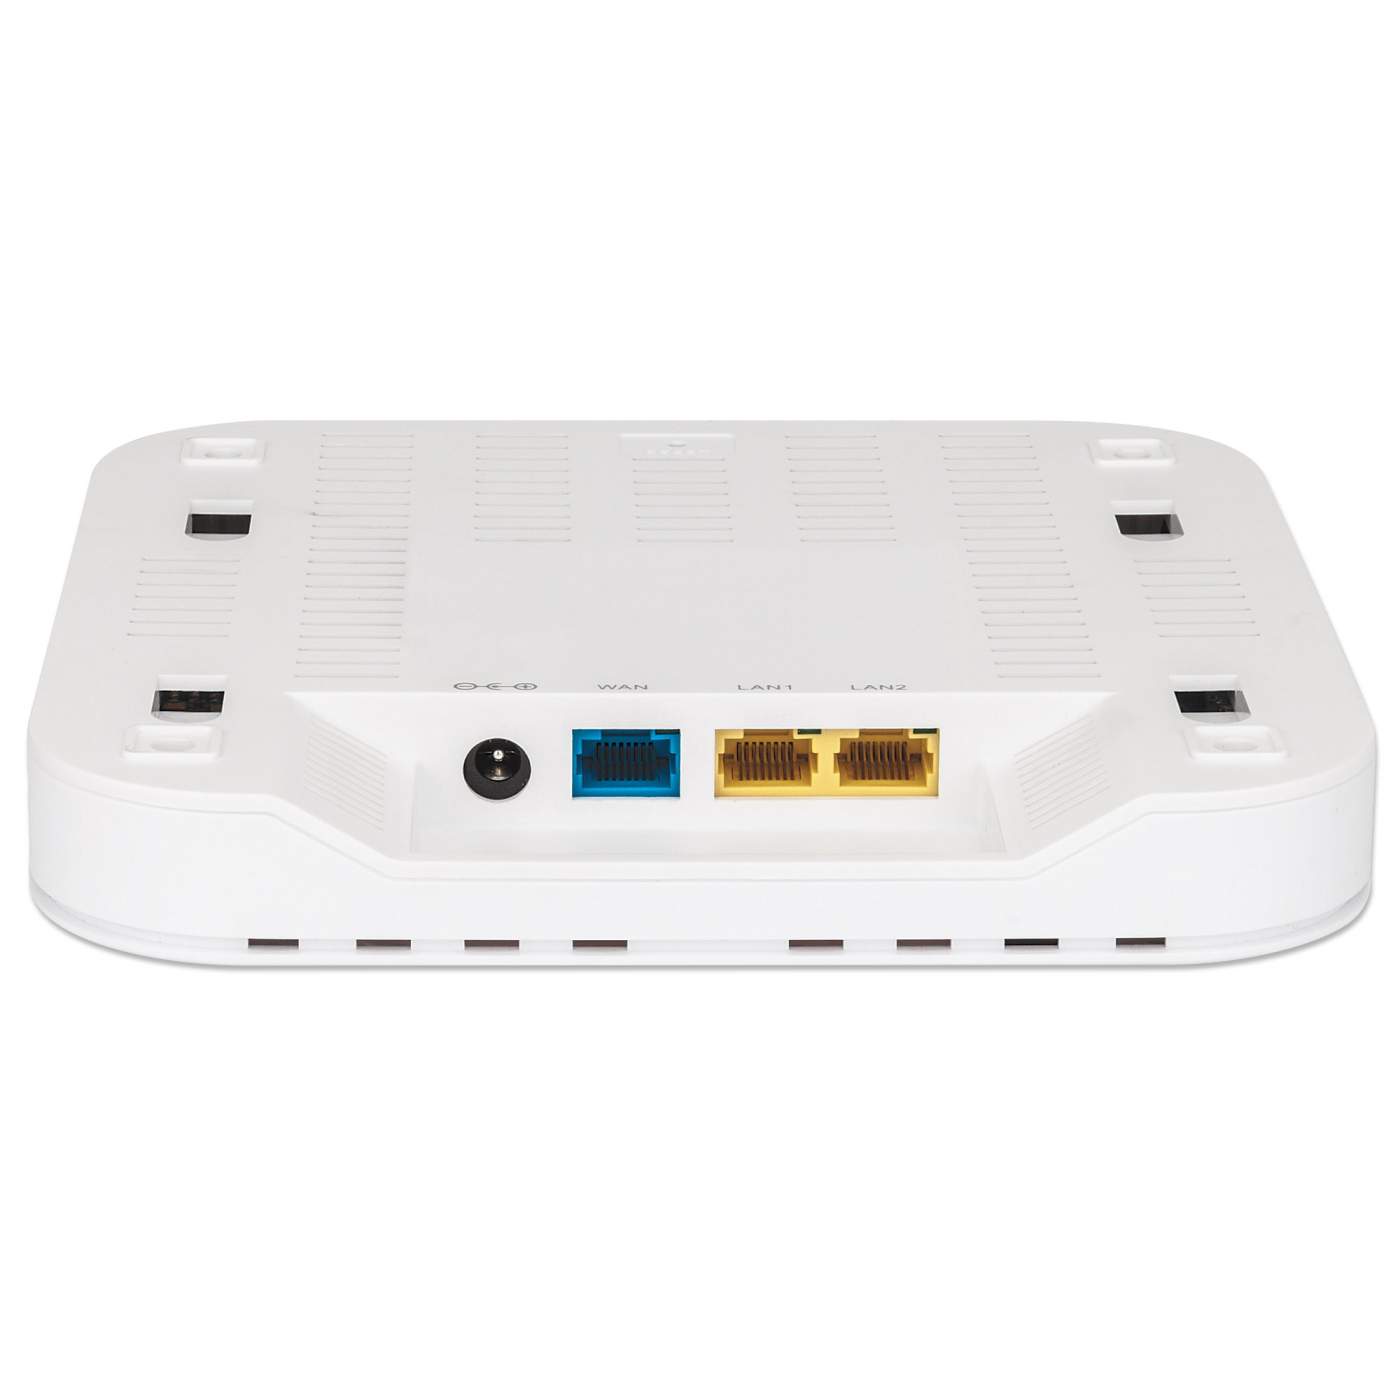 Managebarer Wireless AC1300 Dual-Band Gigabit PoE Indoor Access Point und Router Image 5